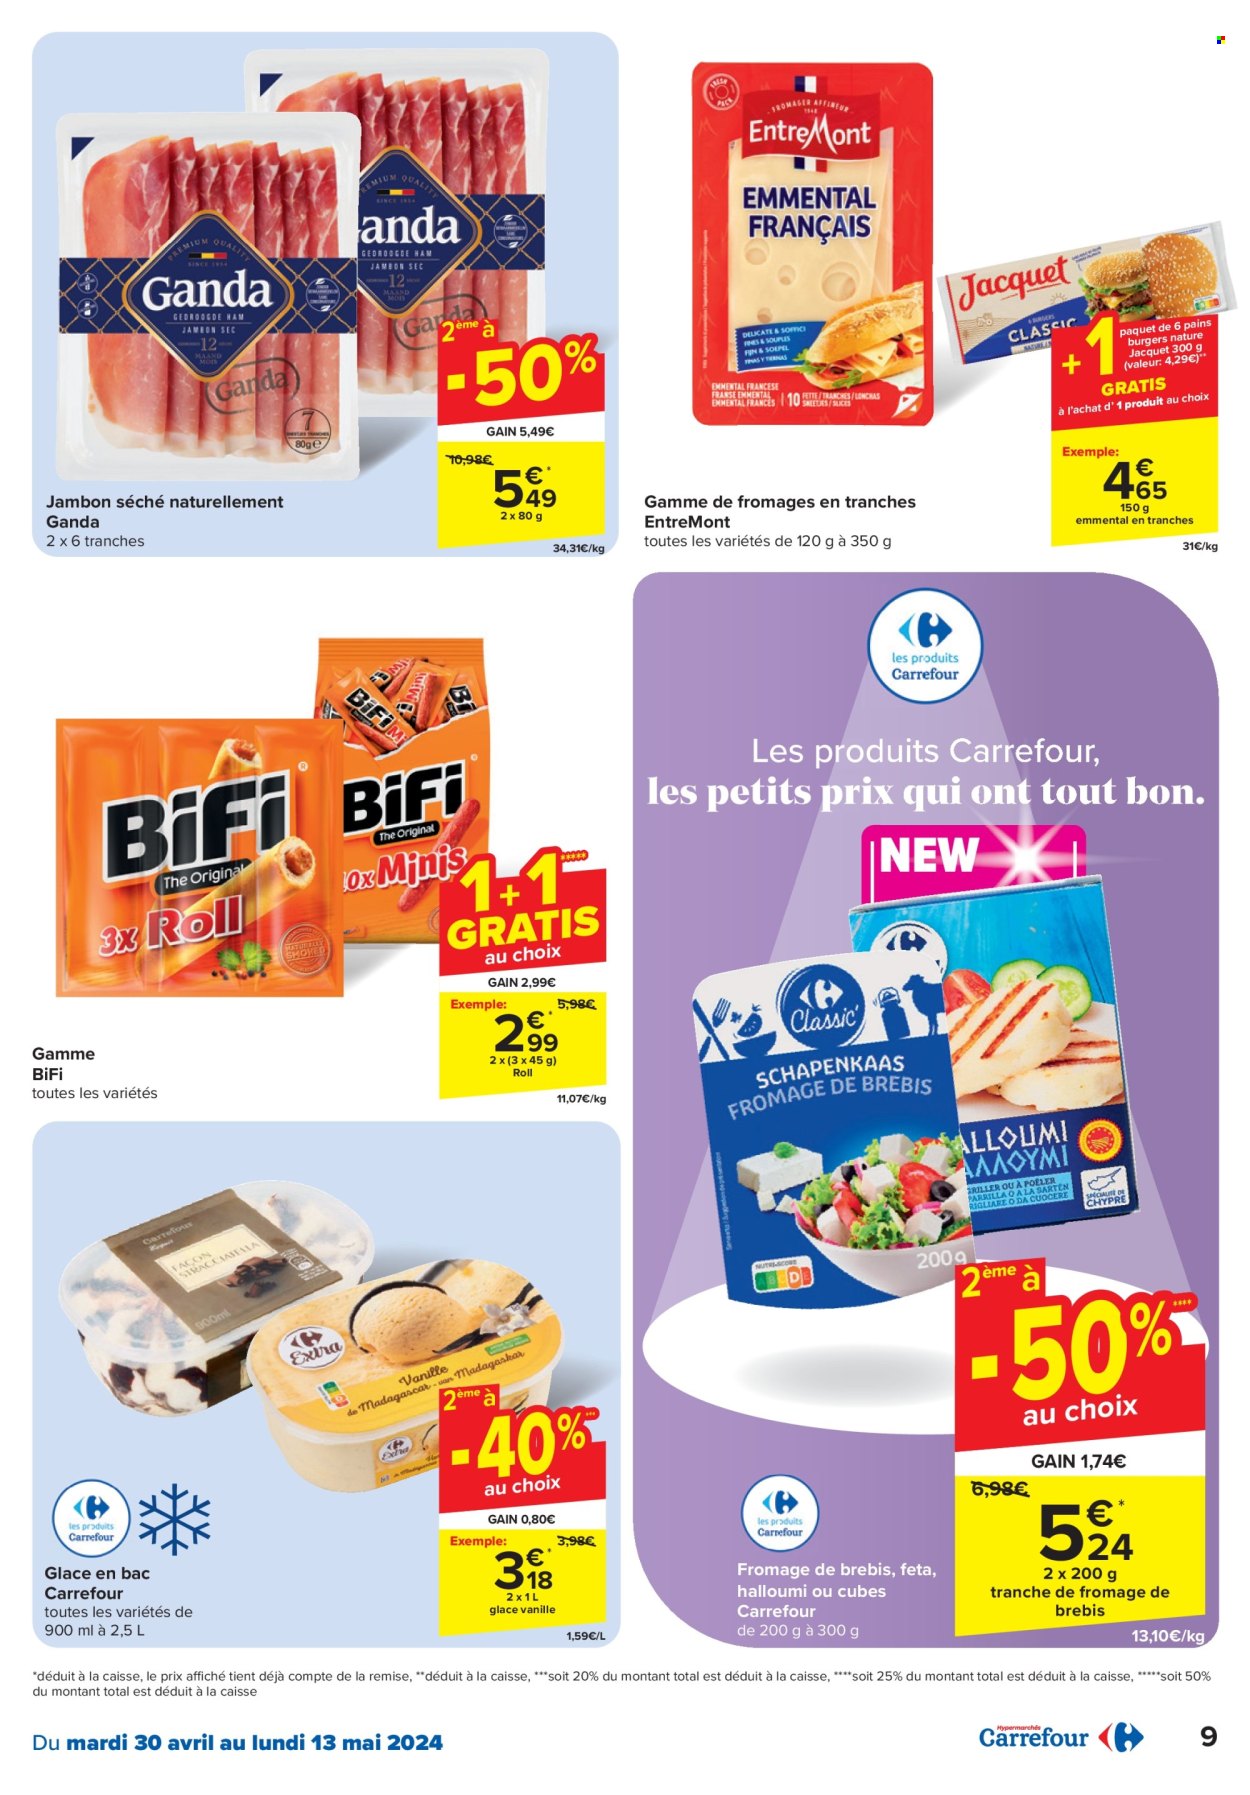 thumbnail - Carrefour hypermarkt-aanbieding - 30/04/2024 - 13/05/2024 -  producten in de aanbieding - halloumi, Emmental, Feta. Pagina 9.